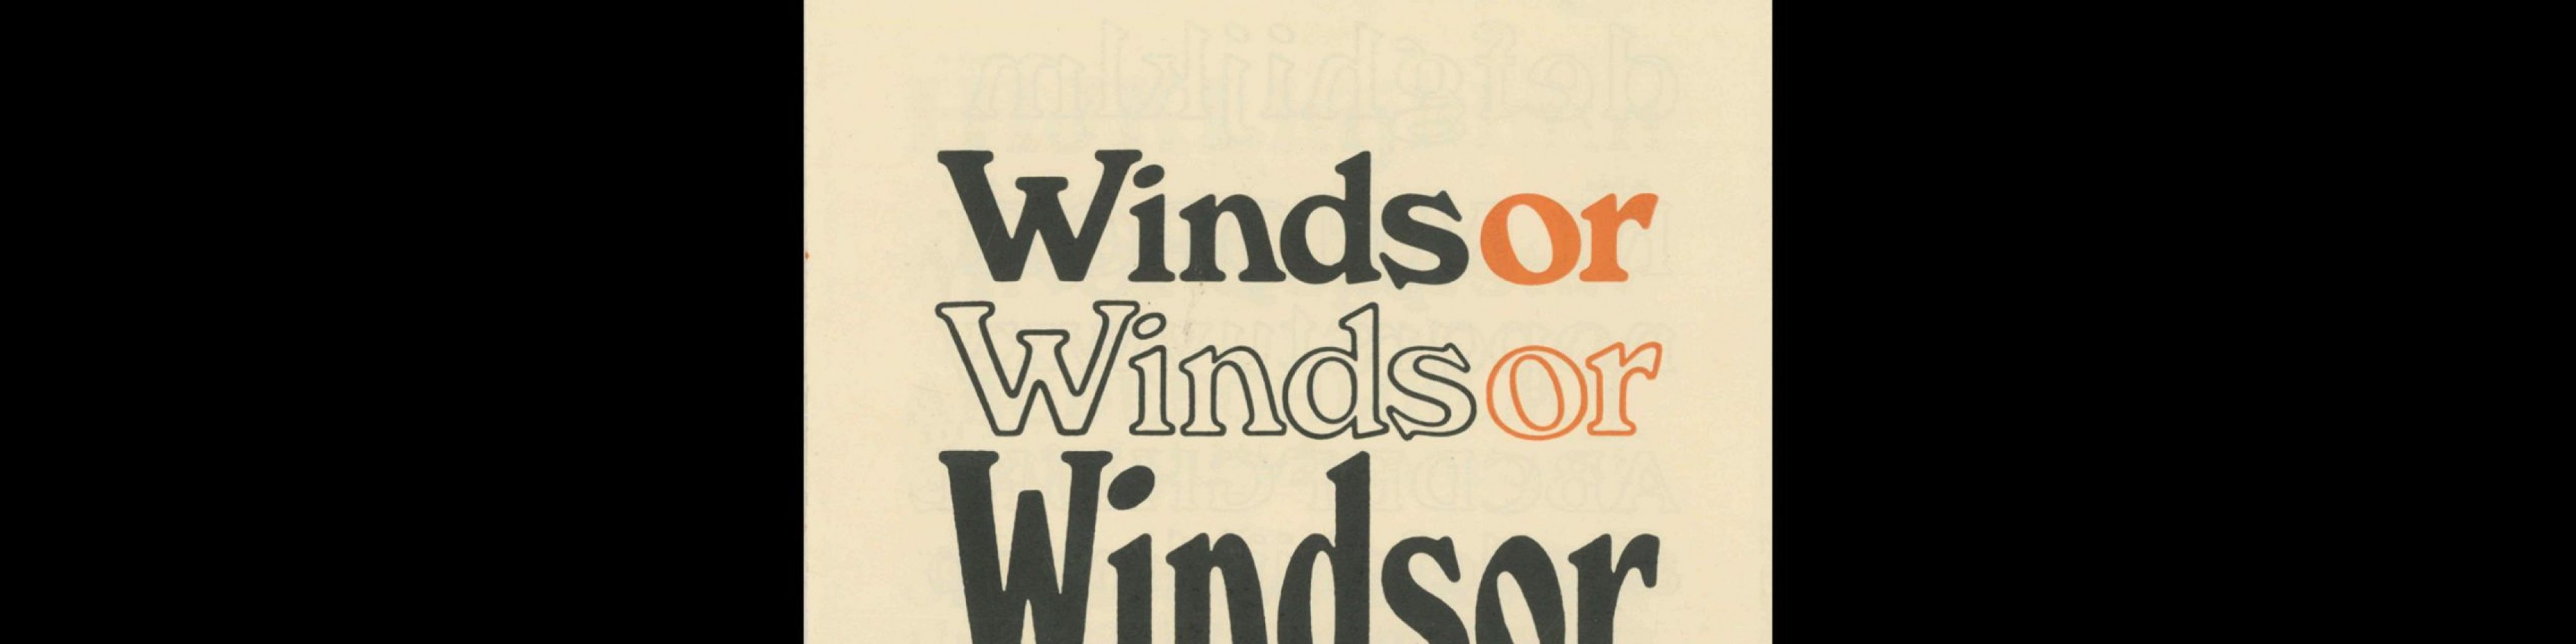 Windsor, Stephenson Blake, 1960s